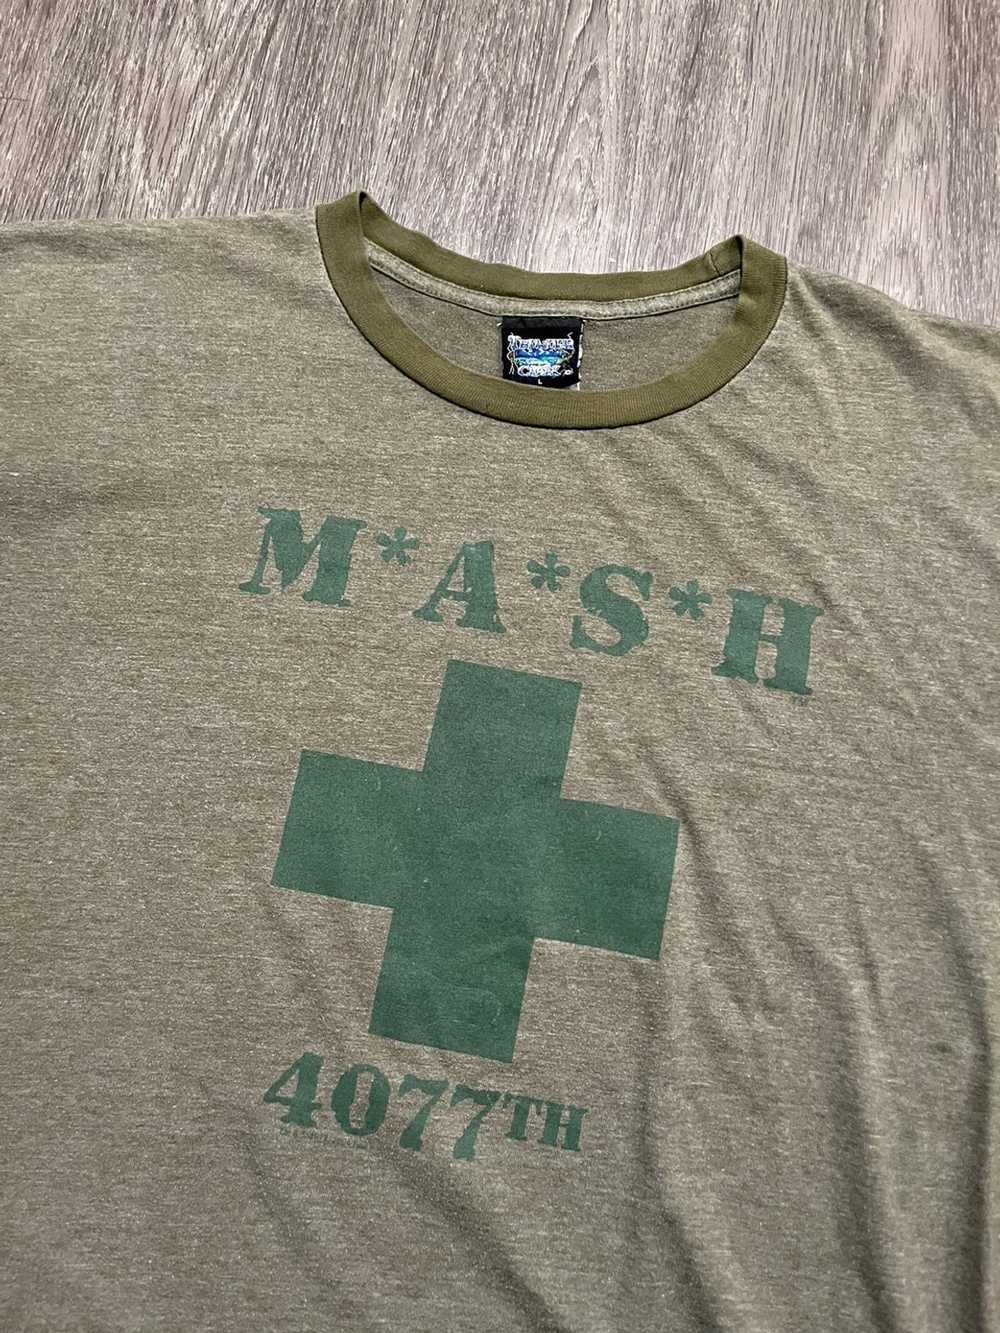 Vintage M*A*S*H 4077th Mash Vintage T-Shirt - image 2